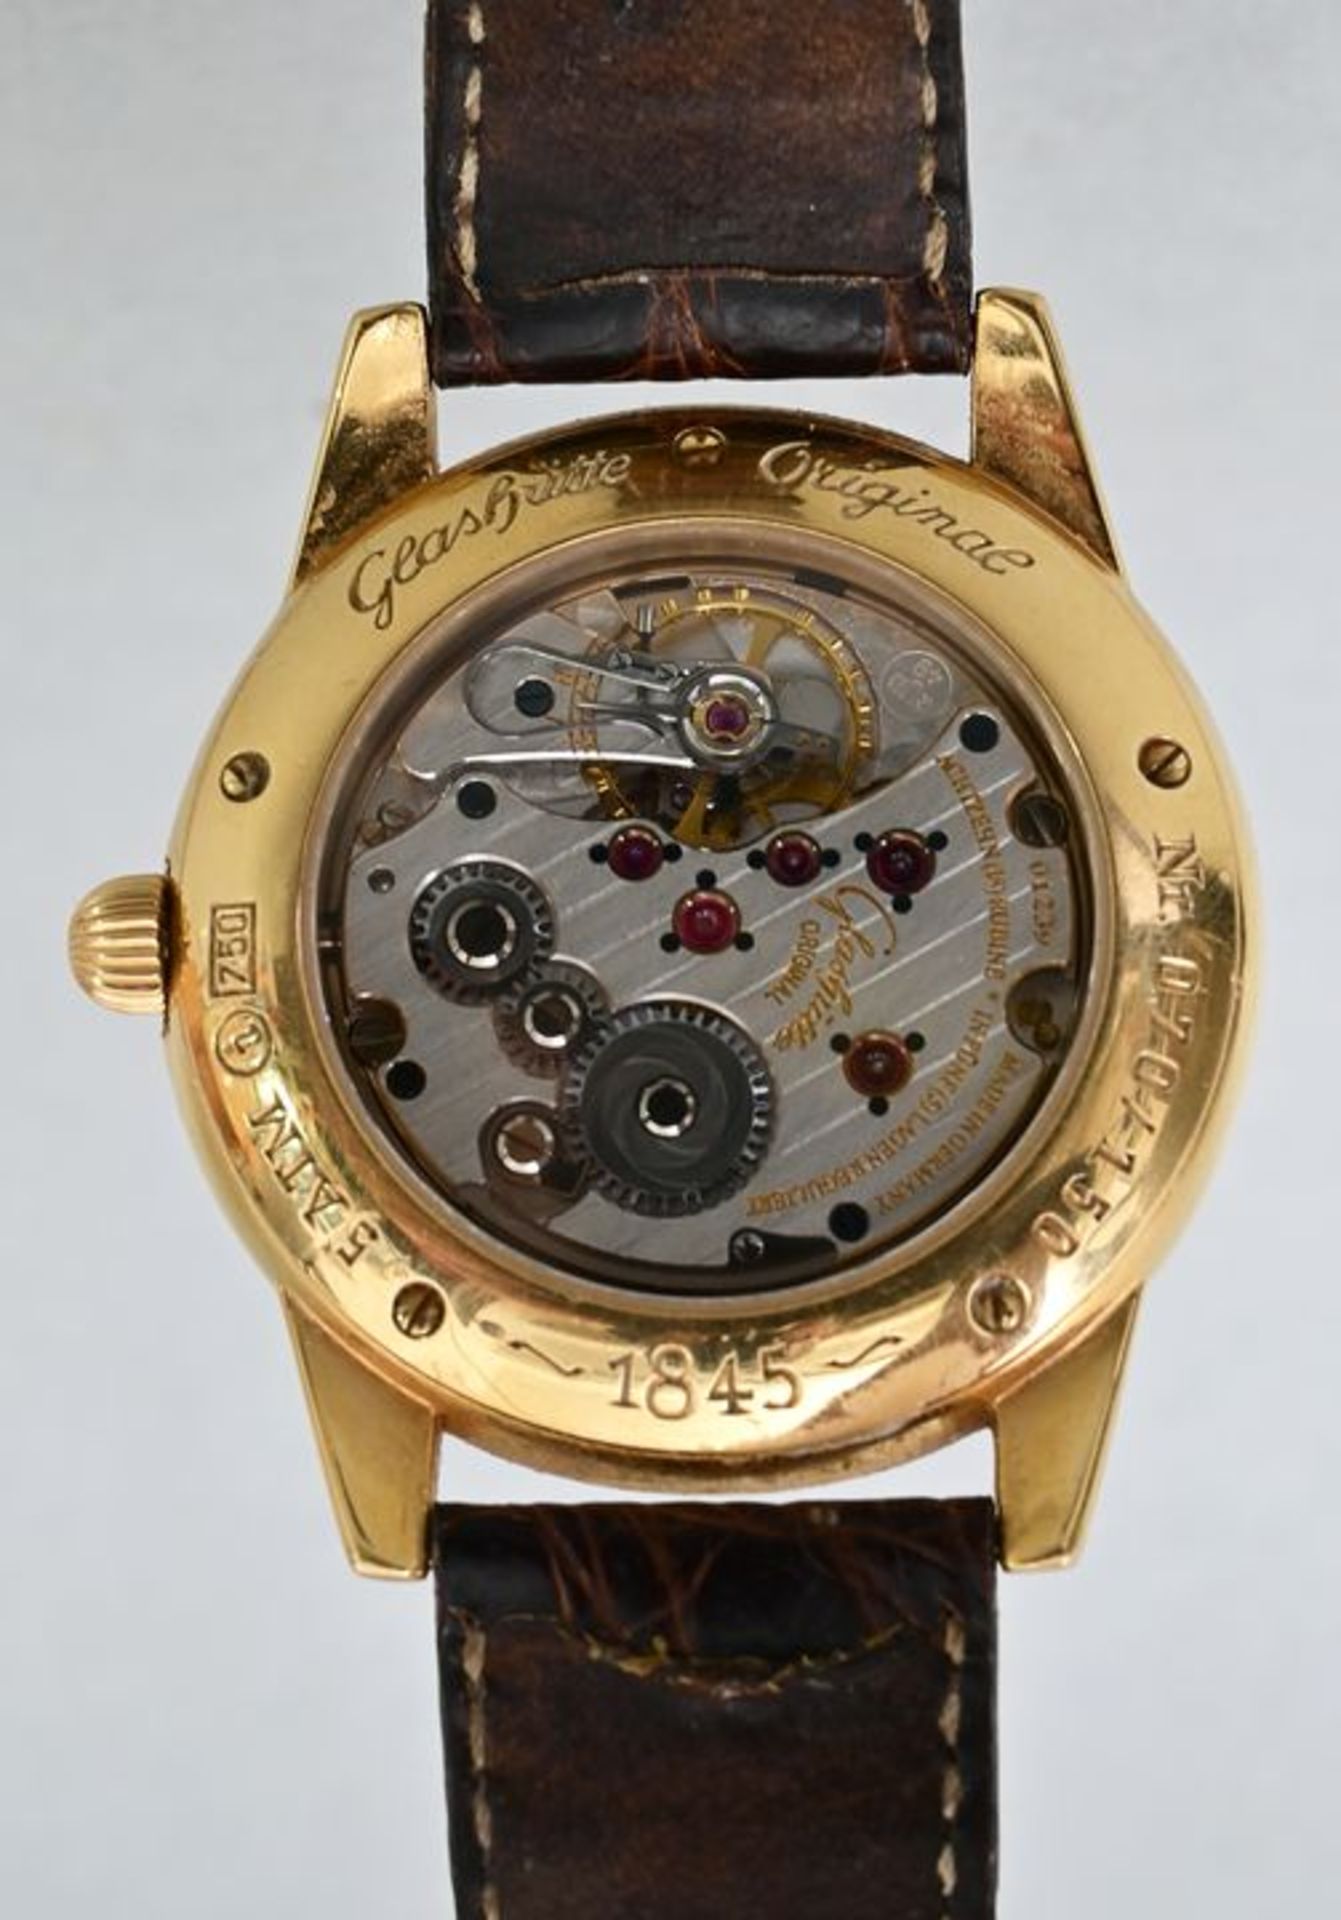 Gold-Armbanduhr Glashütte/ Glashütte wristwatch - Image 2 of 5